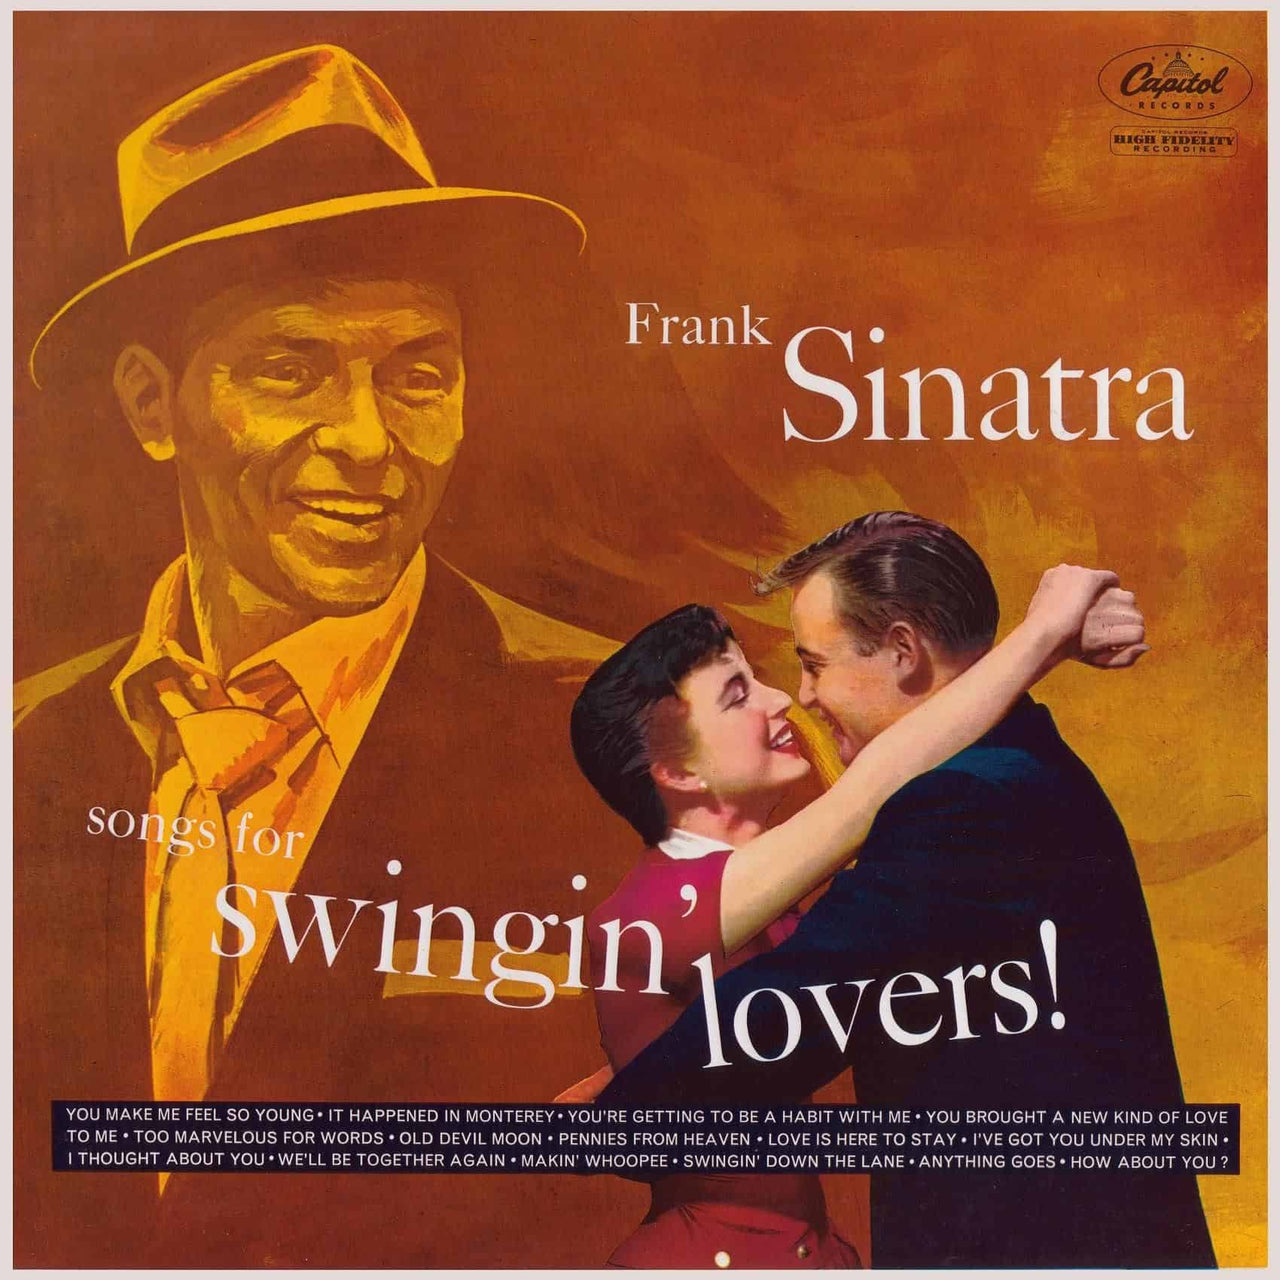 FRANK SINATRA - SONGS FOR SWINGIN' LOVERS!